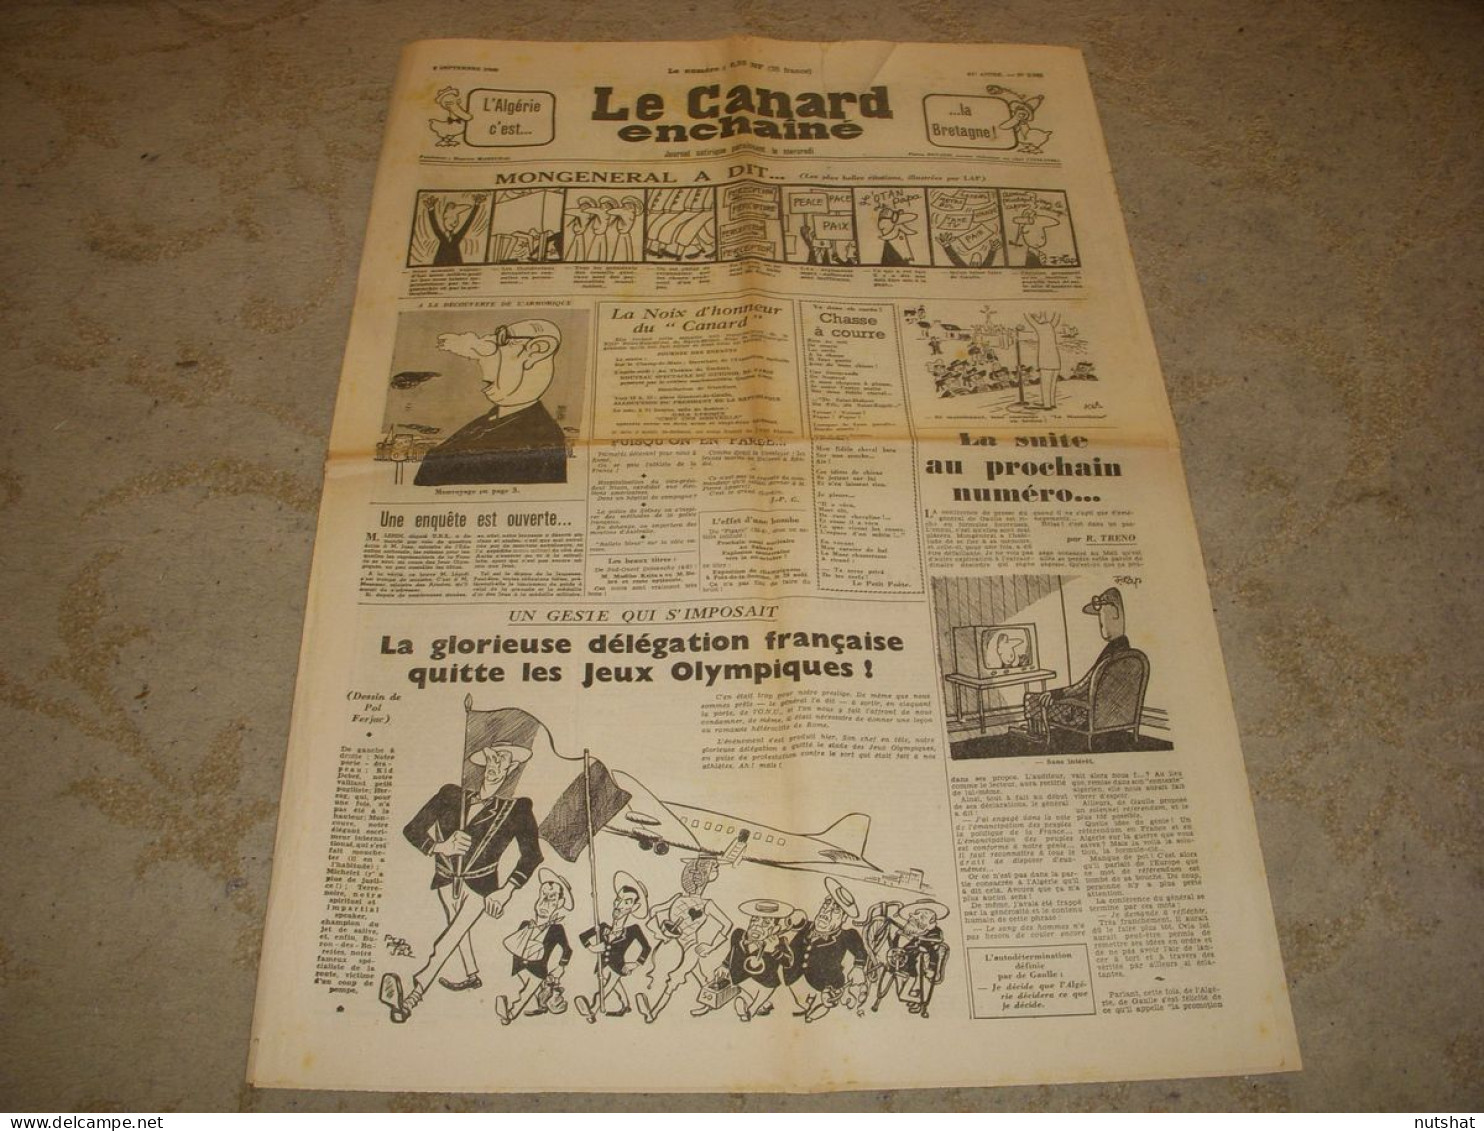 CANARD ENCHAINE 2081 07.09.1960 Jean NOHAIN Jean RIEUX Edna O'BRIEN L'OPUS DEI - Politique